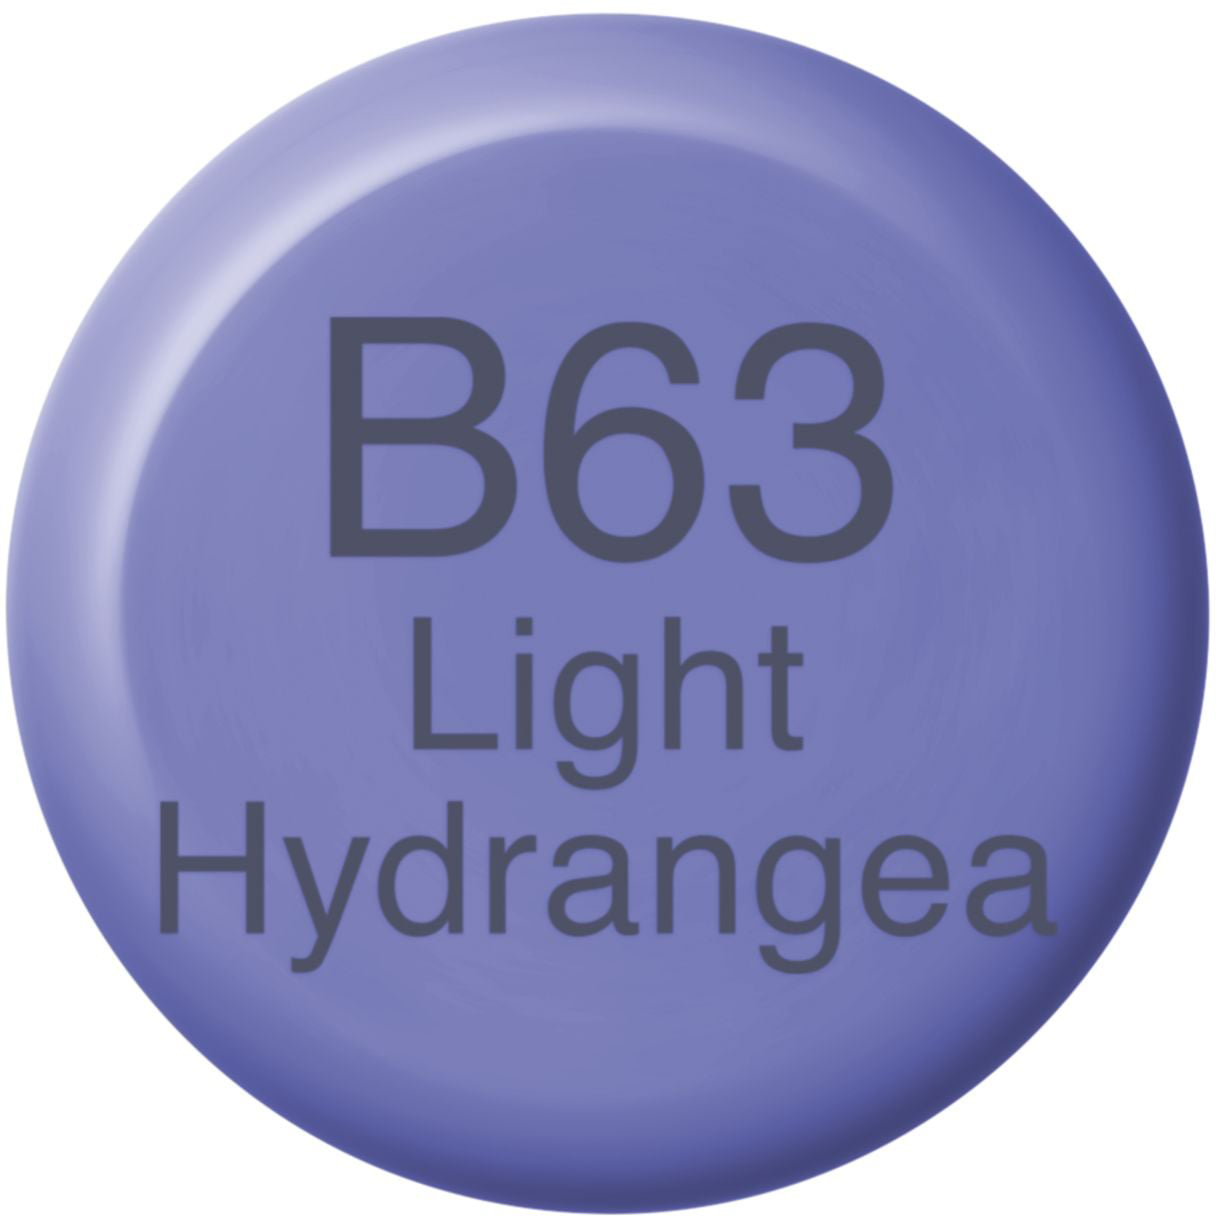 COPIC Ink Refill 21076154 B63 - Light Hydrangea B63 - Light Hydrangea